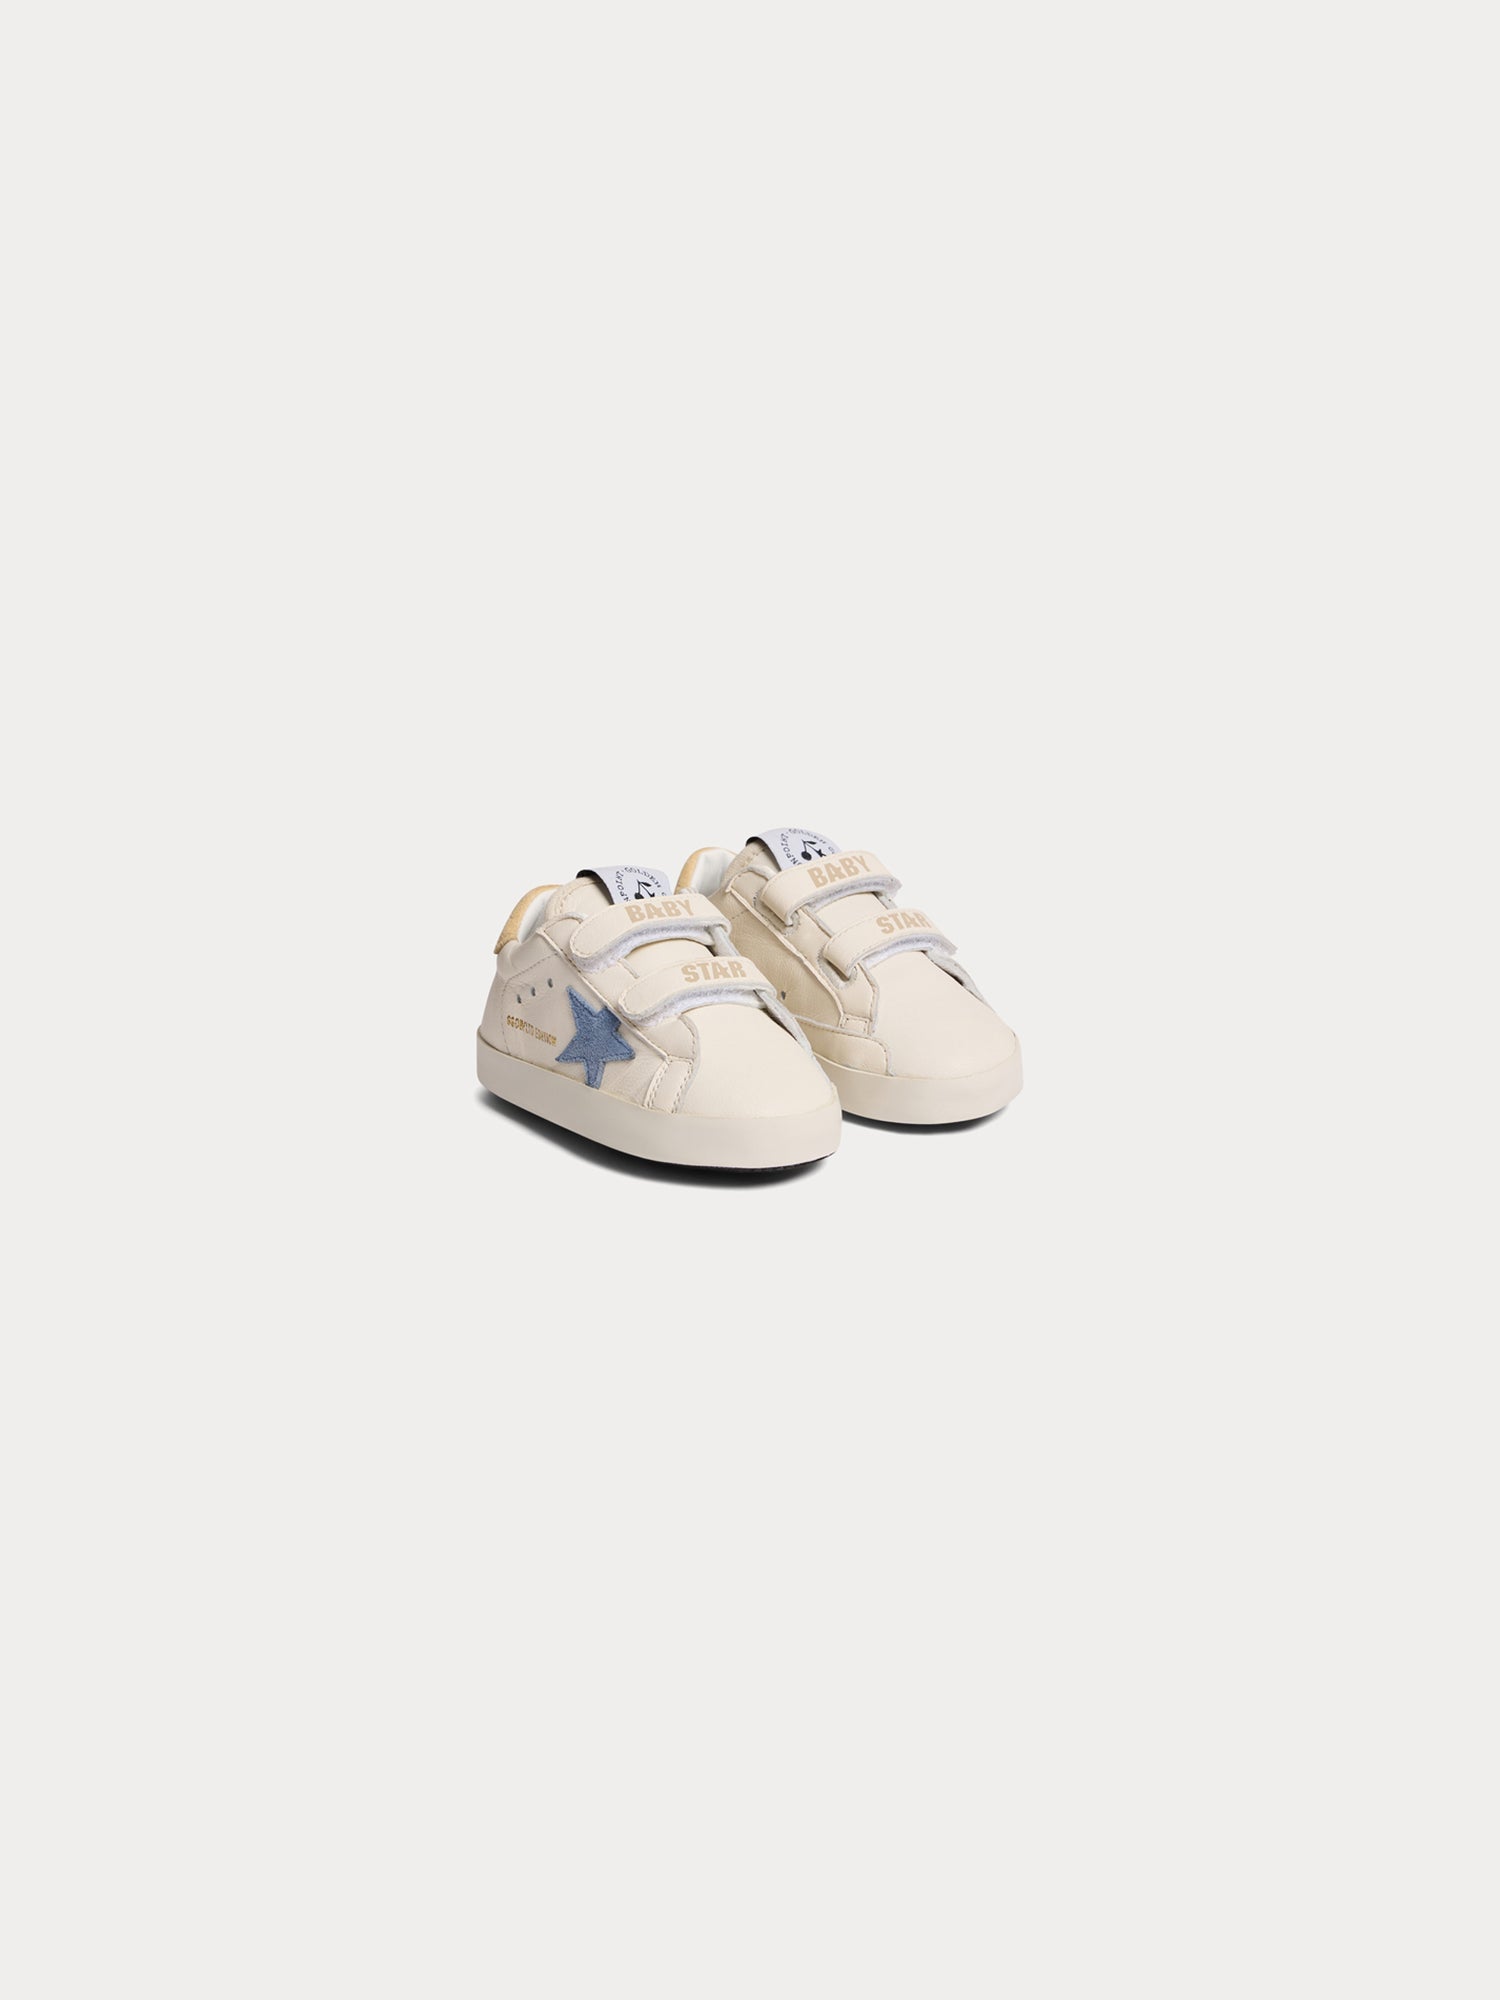 Baby Boys & Girls White Shoes(Bonpoint x Golden Goose)